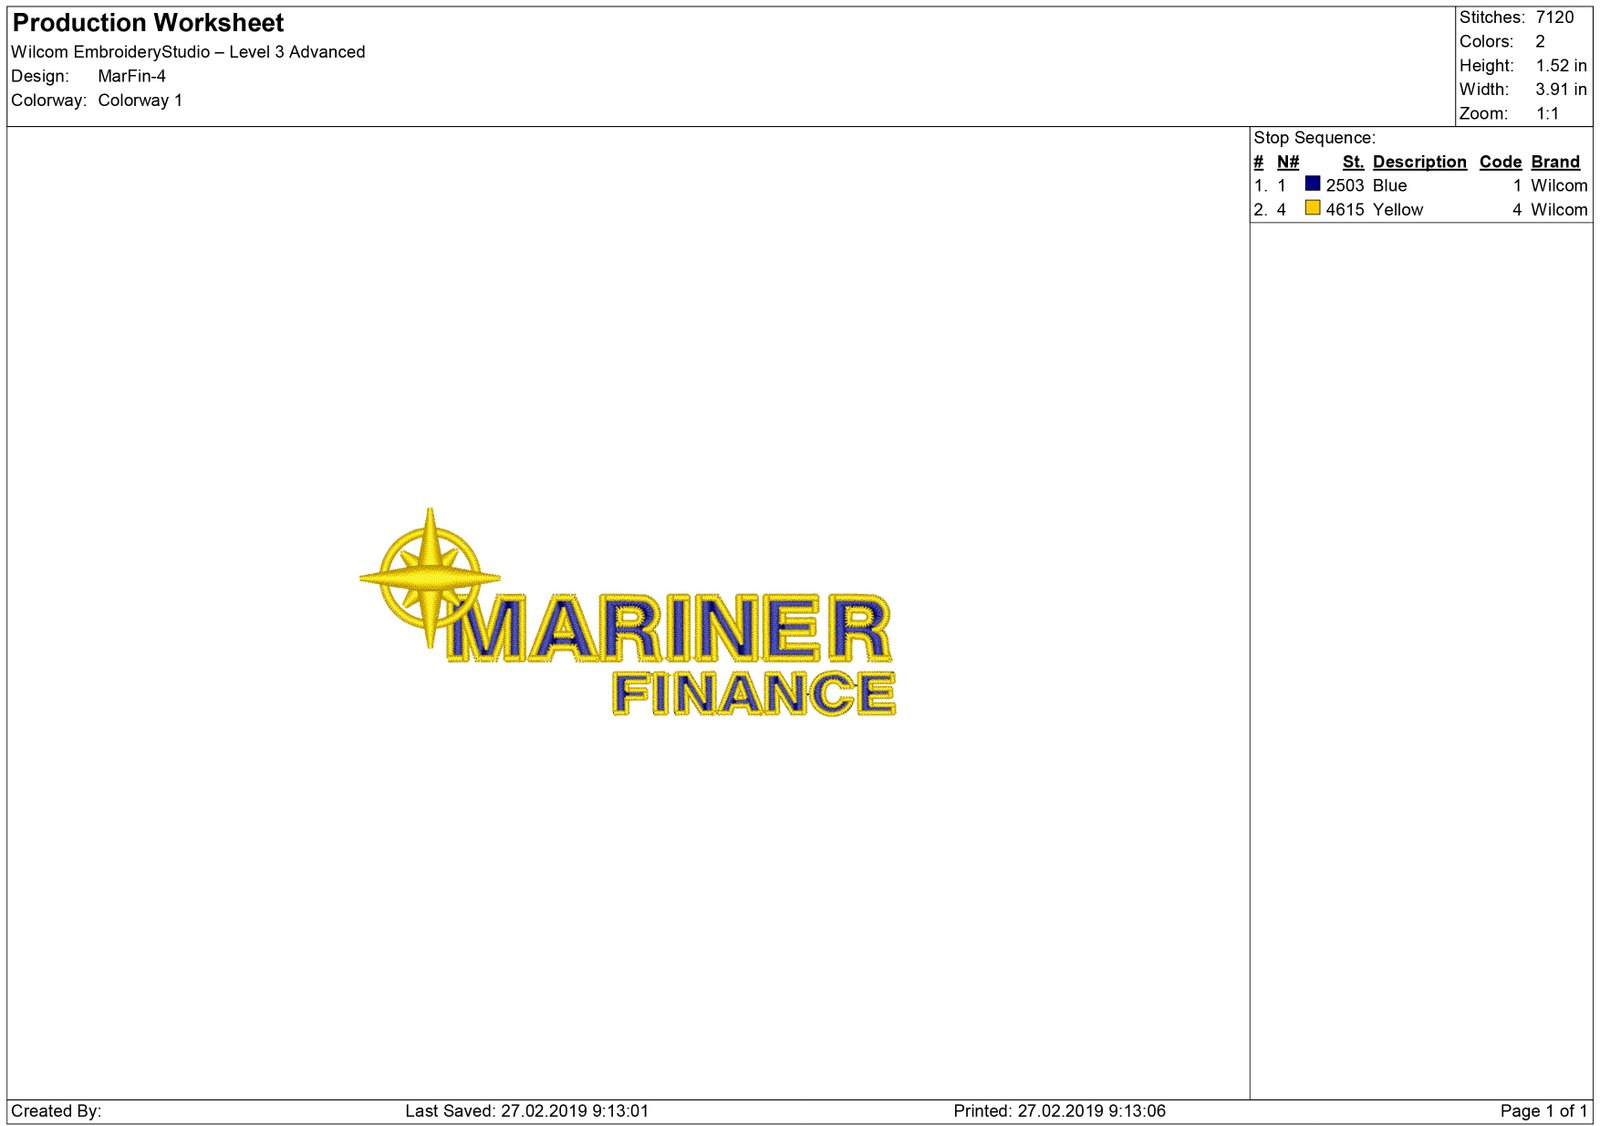 mariner finance logo